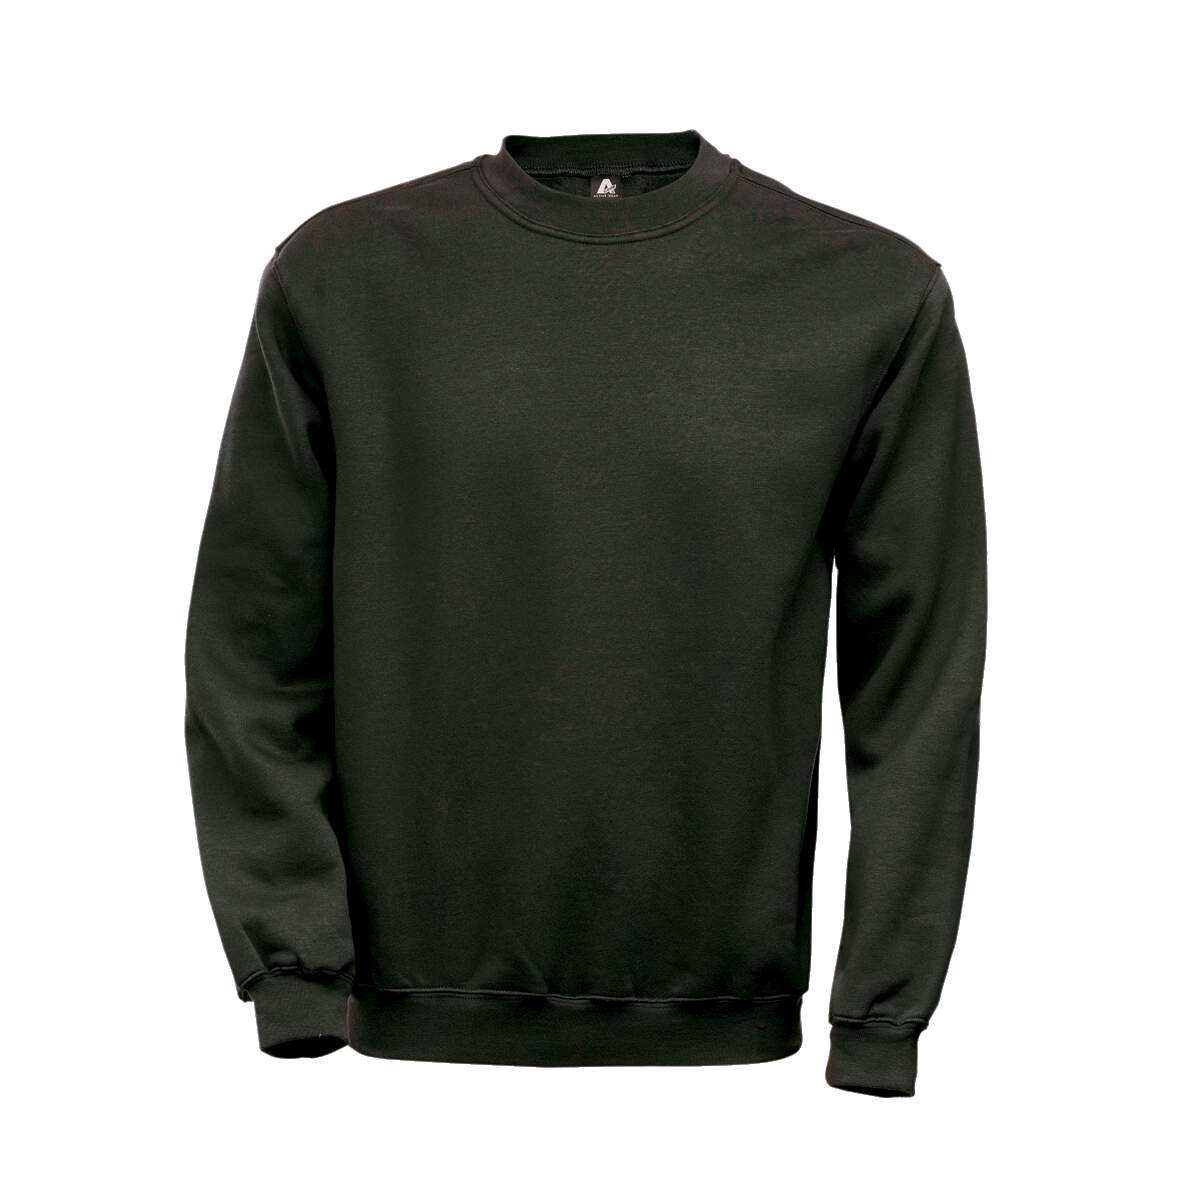 1181286 - Sweatshirt schwarz Gr.S 100225